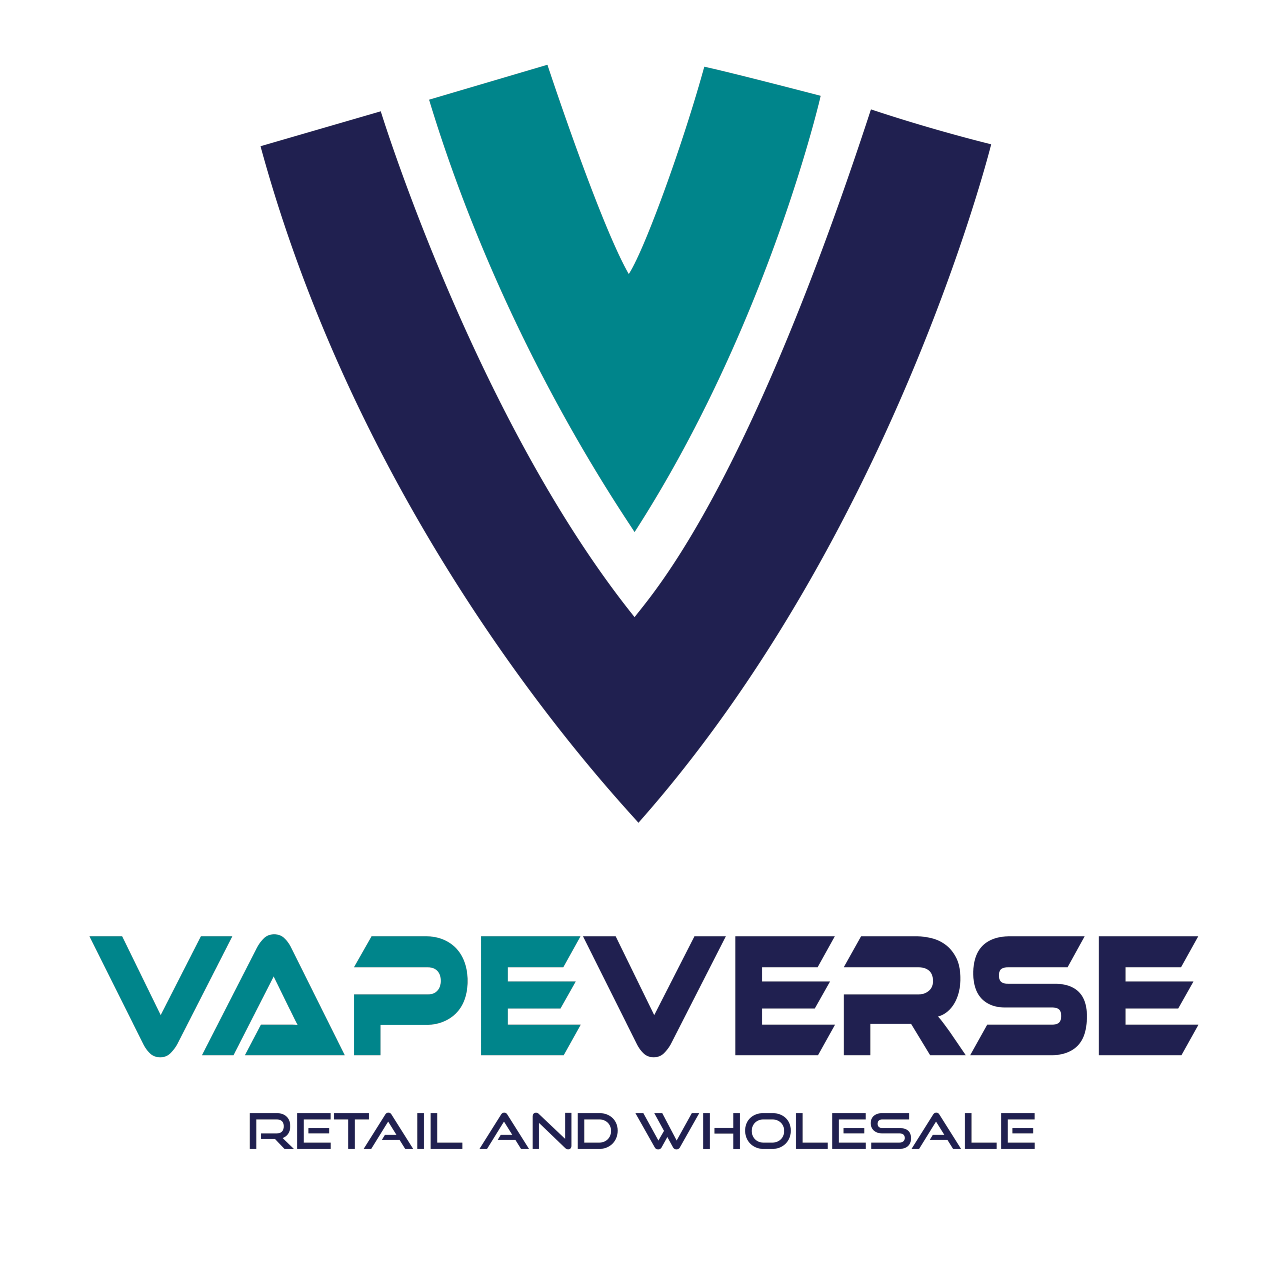 Wholesale VBON Bar 9000 Puffs Disposable Vape 